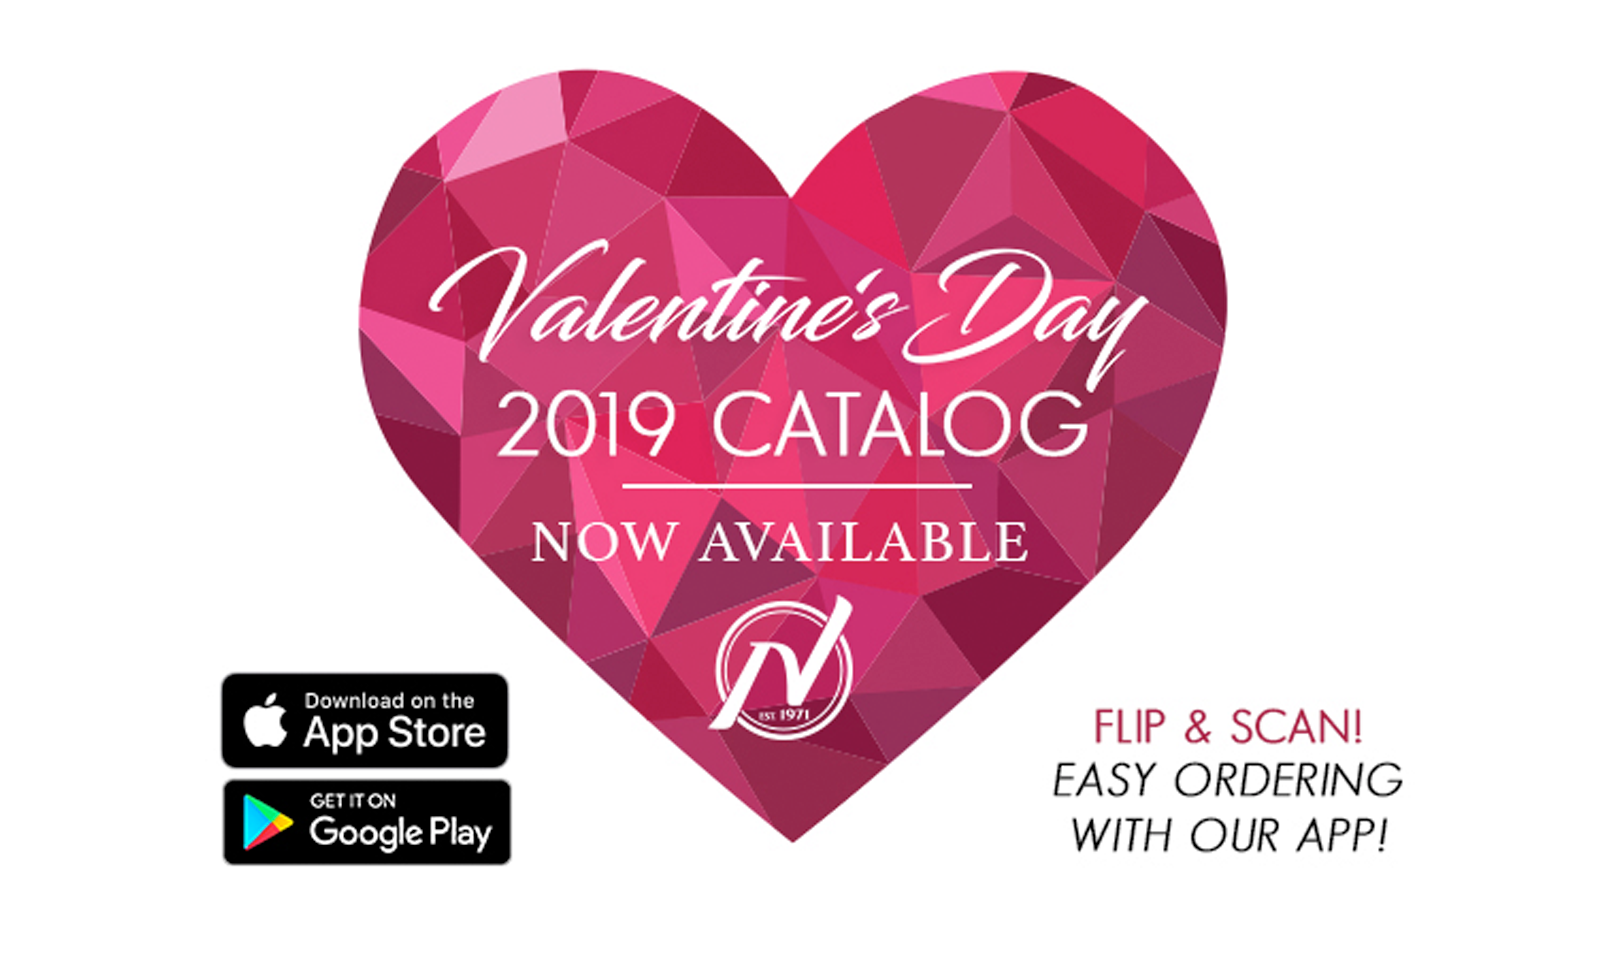 Nalpac Debuts 2019 Valentine’s Day Catalog